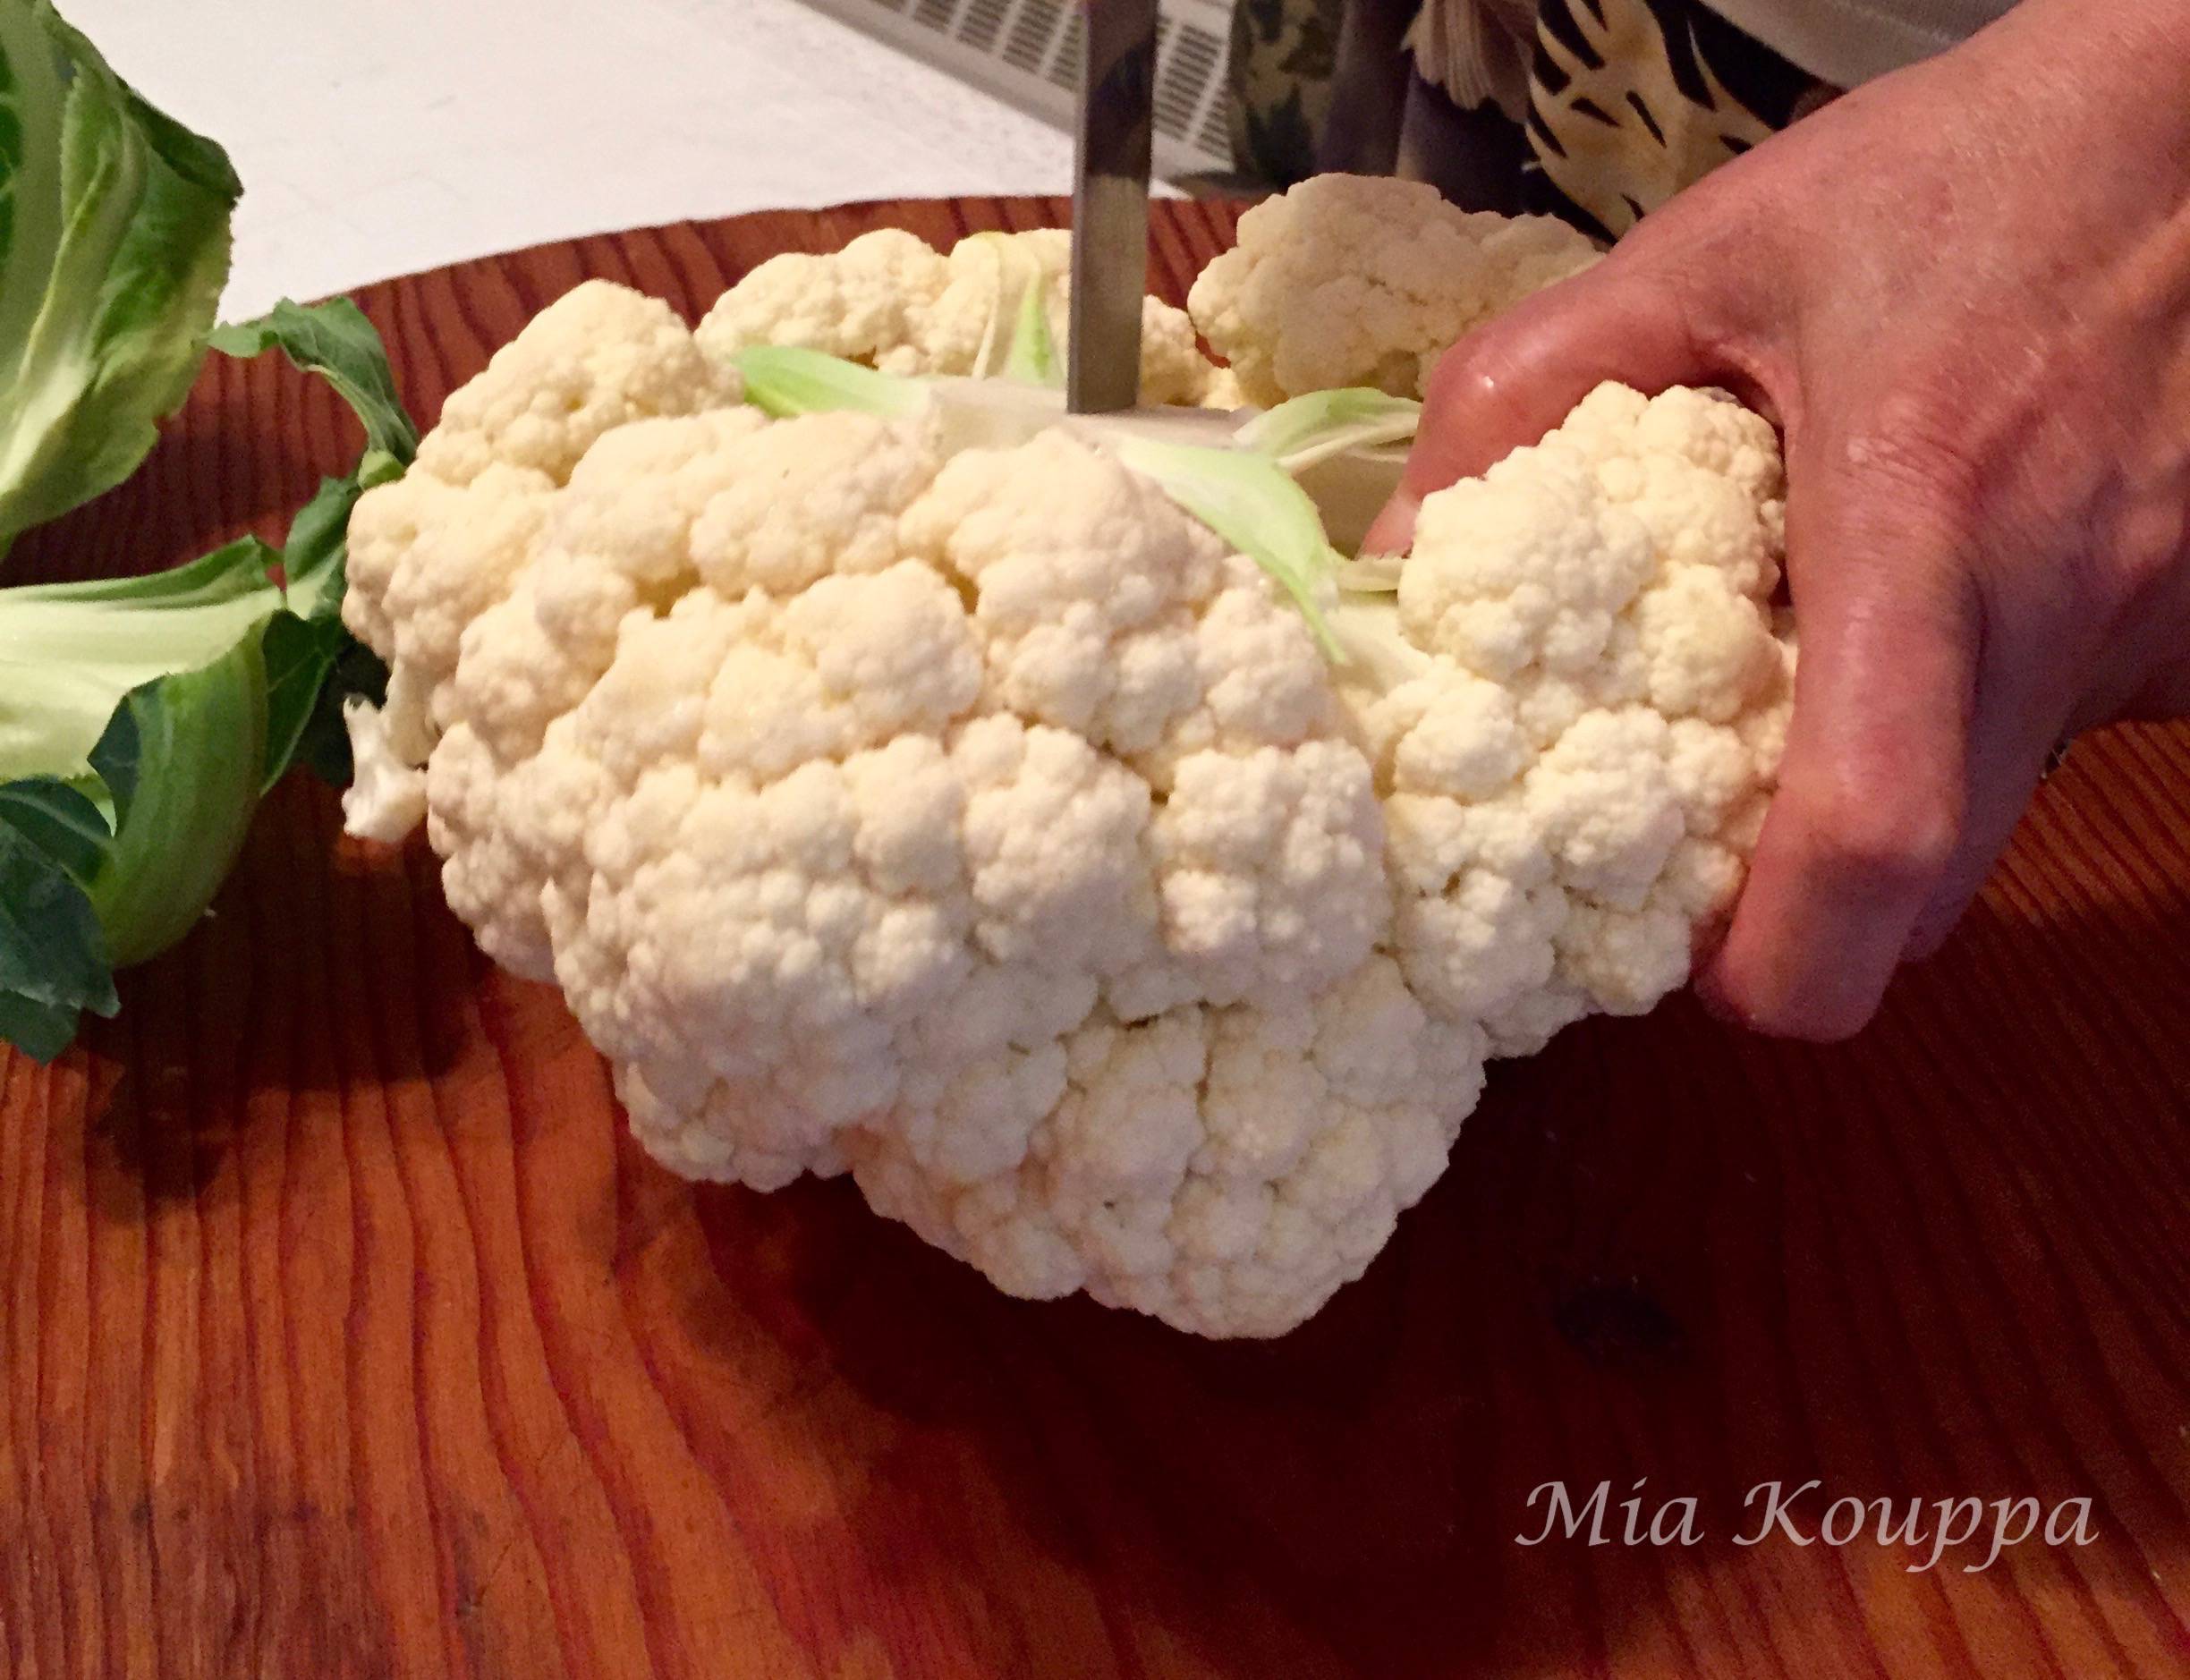 Coring a cauliflower